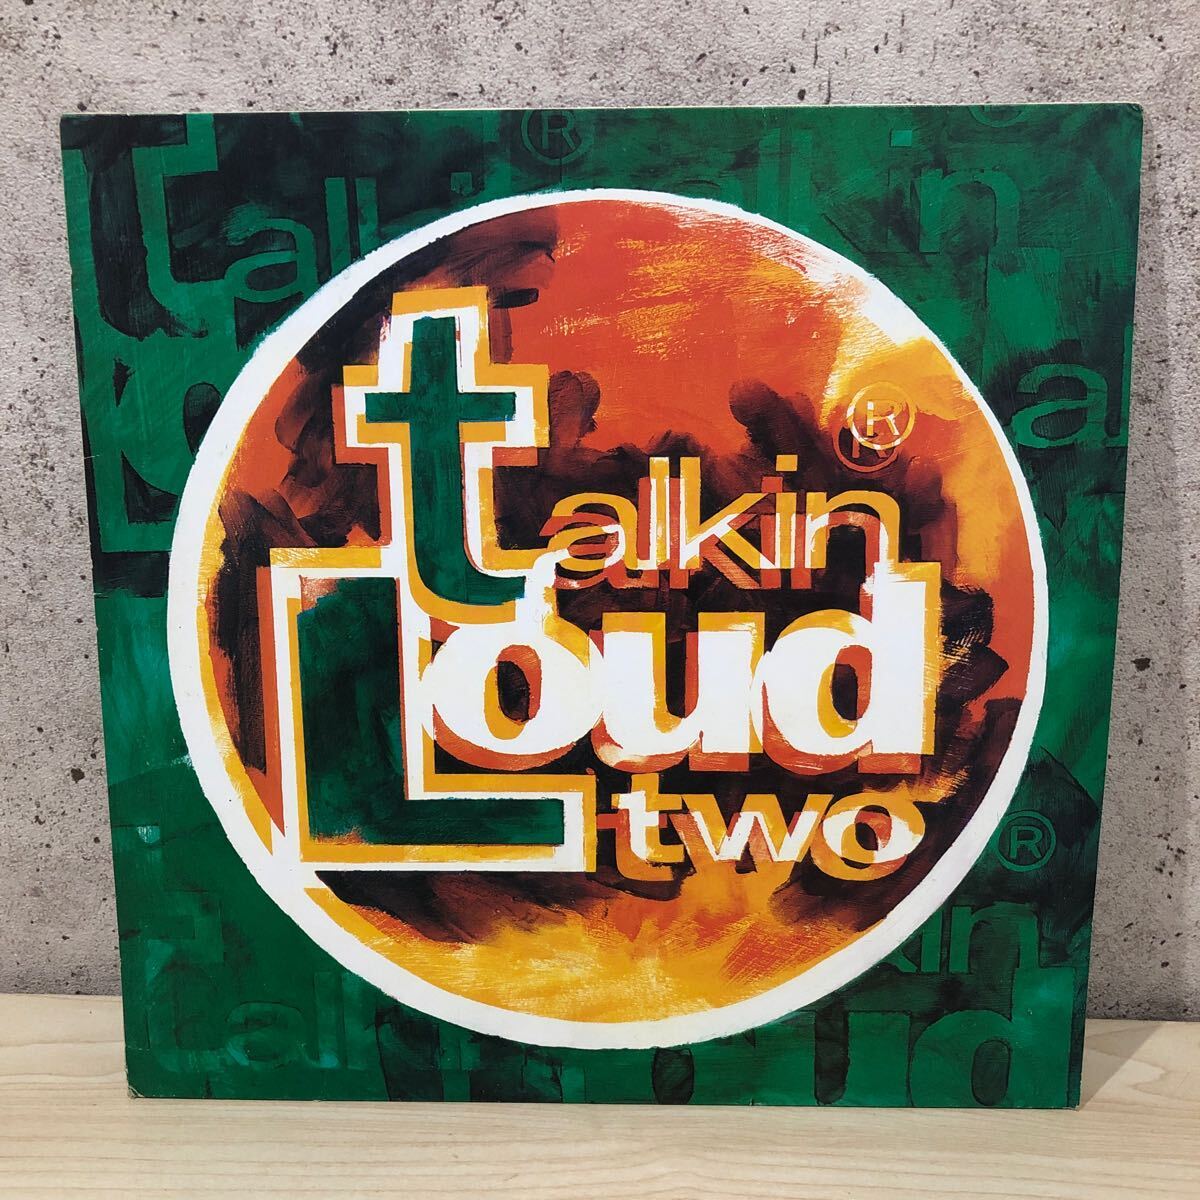 SNR240517 UK盤 トーキング・ラウド LP レコード talkin Loud 515 936-1 talkin Loud two 刻印あり 33rpm ジャズ JAZZ_画像1